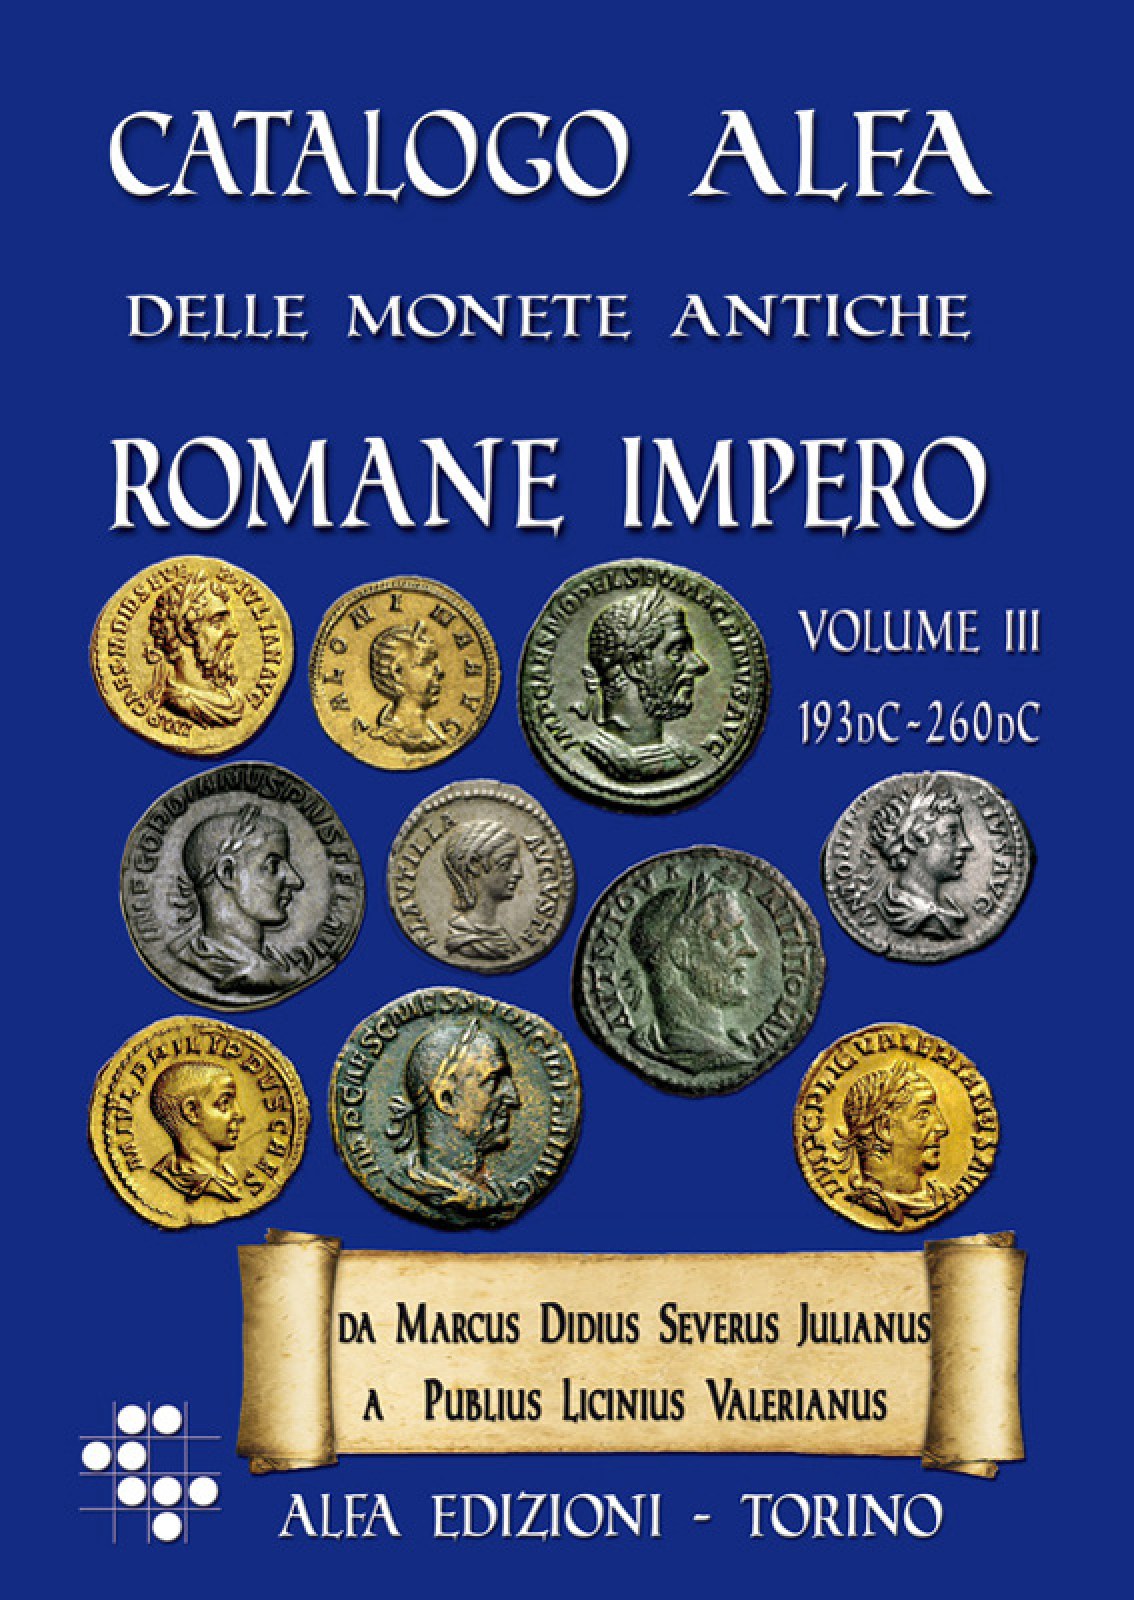 vol.3 catalogo alfa romane impero